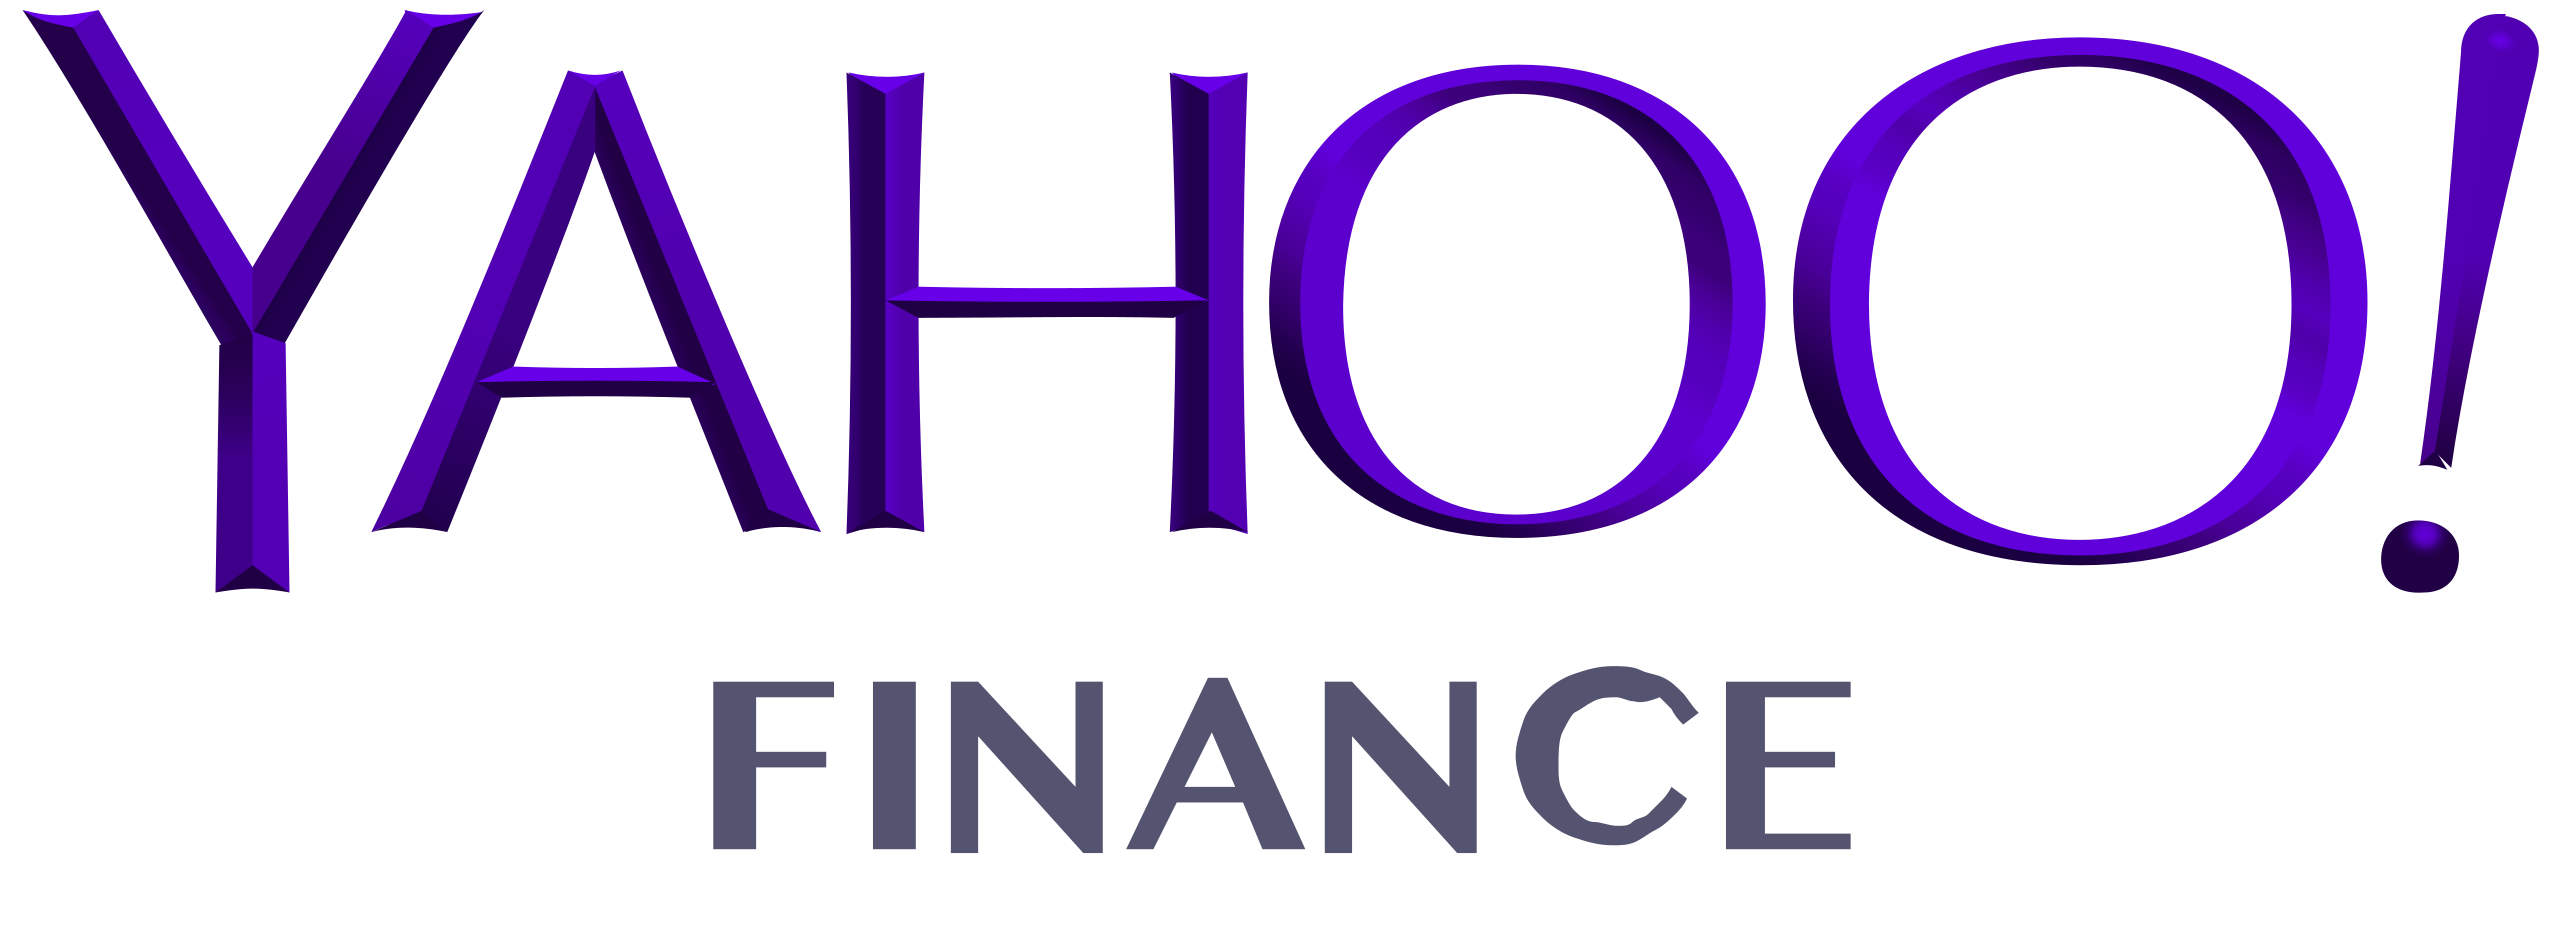 File:Yahoo Finance Logo 2013.svg - Wikimedia Commons